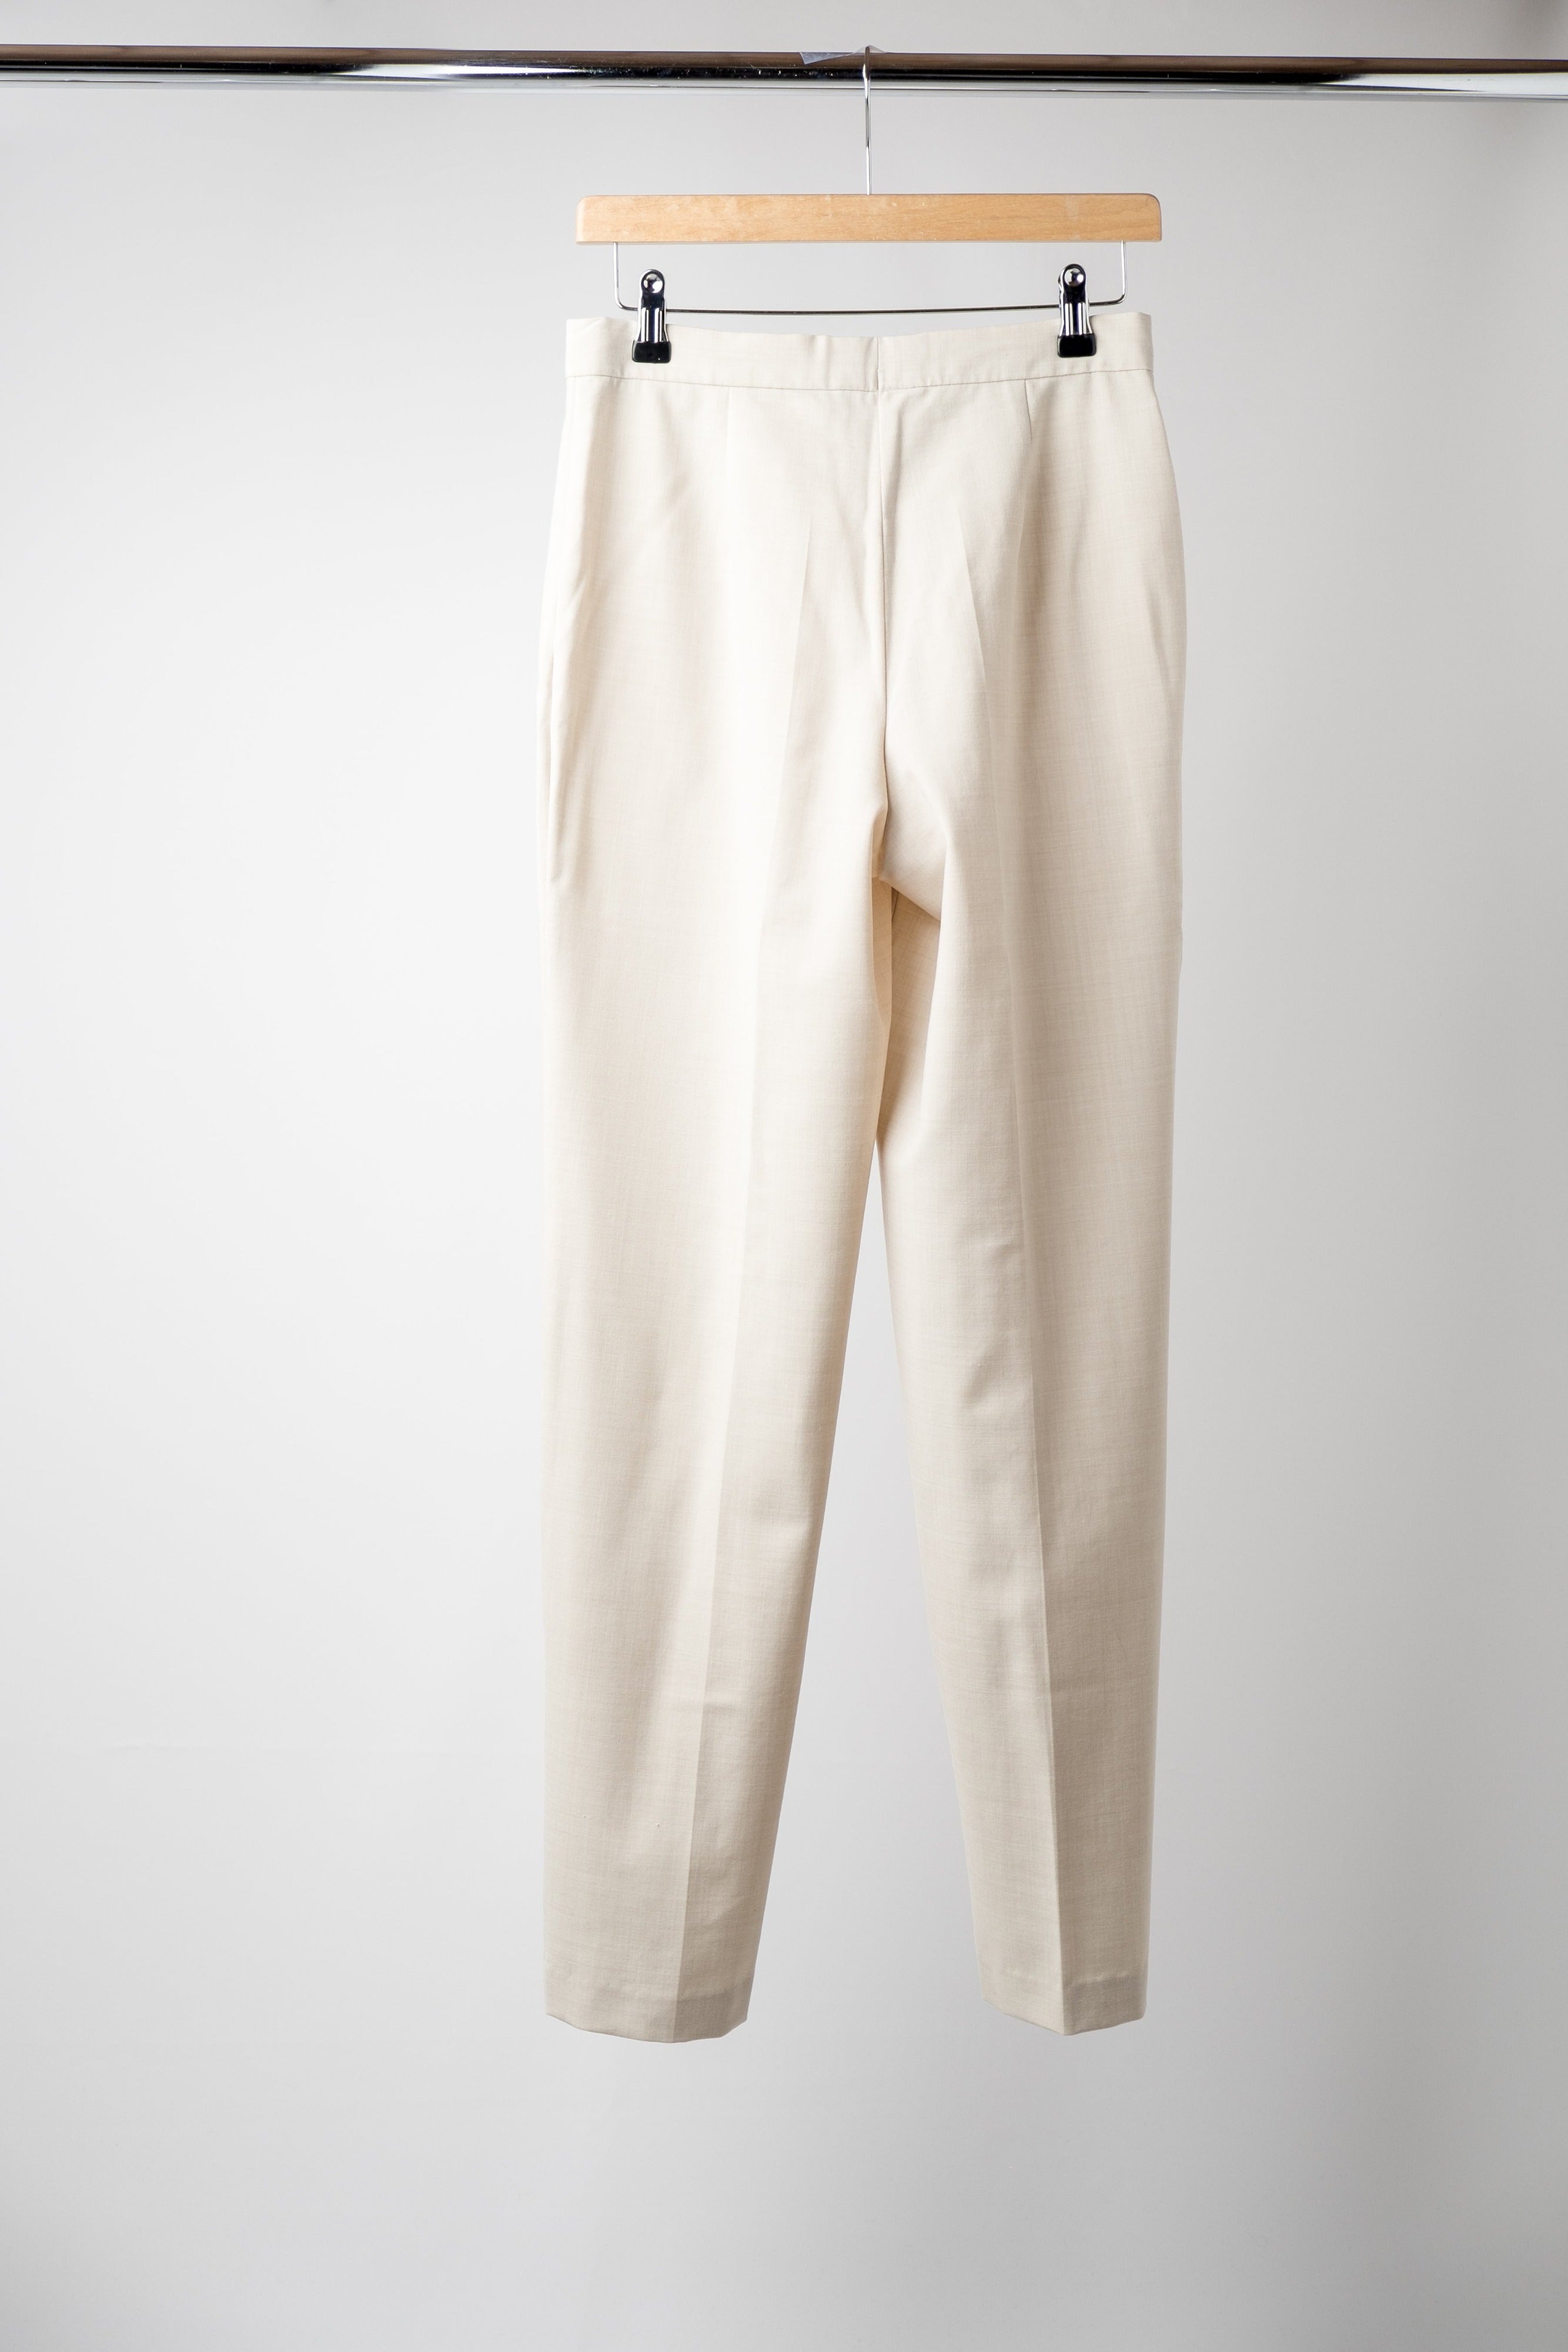 Berigelse titel nægte Lyse vintage bukser | Simple Decades - Curated Vintage / Secondhand clothing